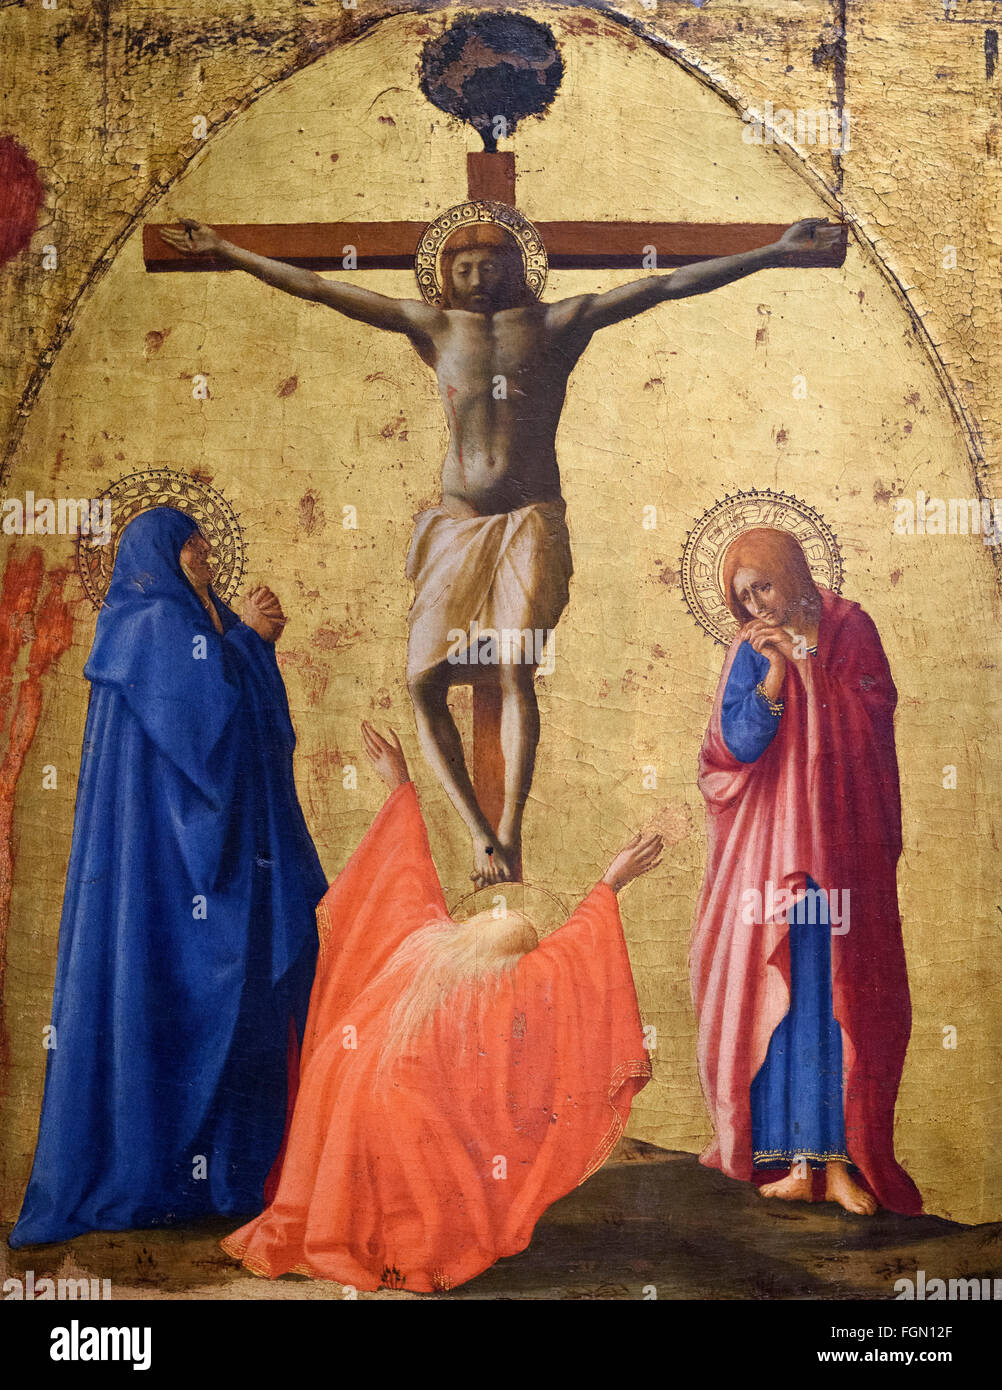 Masaccio. The Holy Trinity. Fresco, 1427. 21 x 10 ' (667 x 317 cm